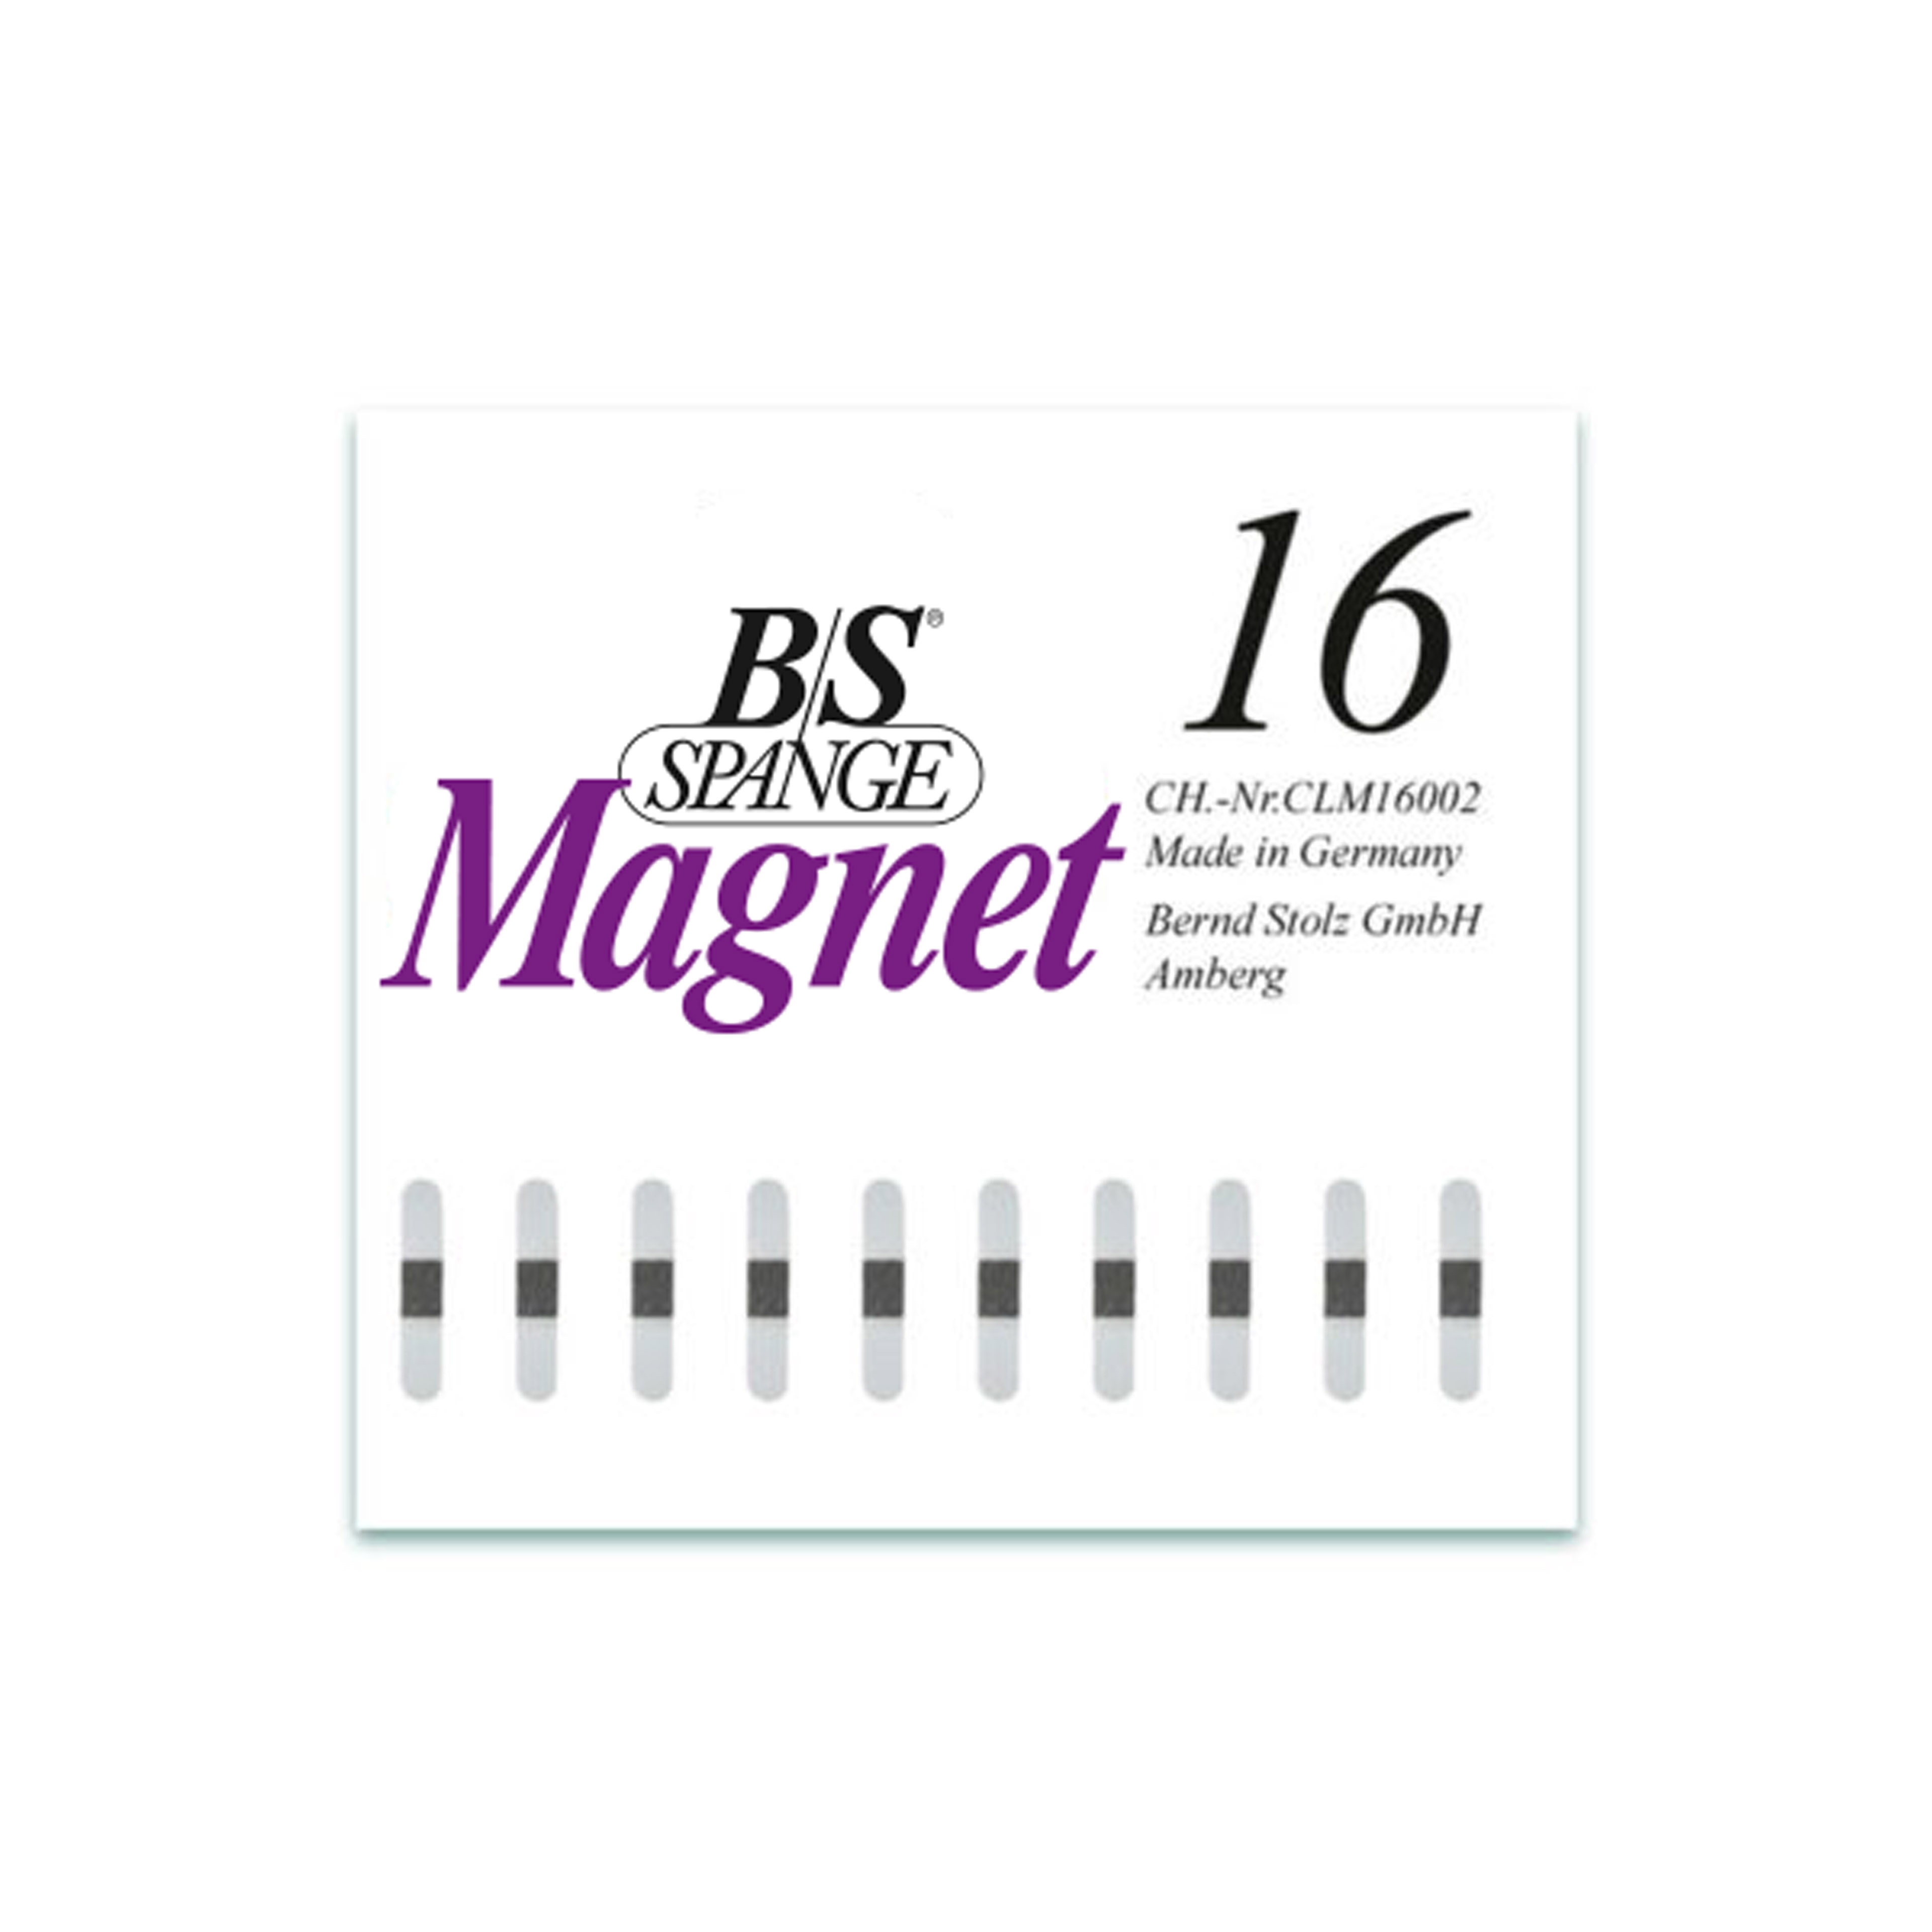 B/S Spangen Magnet Classic | Länge 16 Breite 3 mm 10 Stück